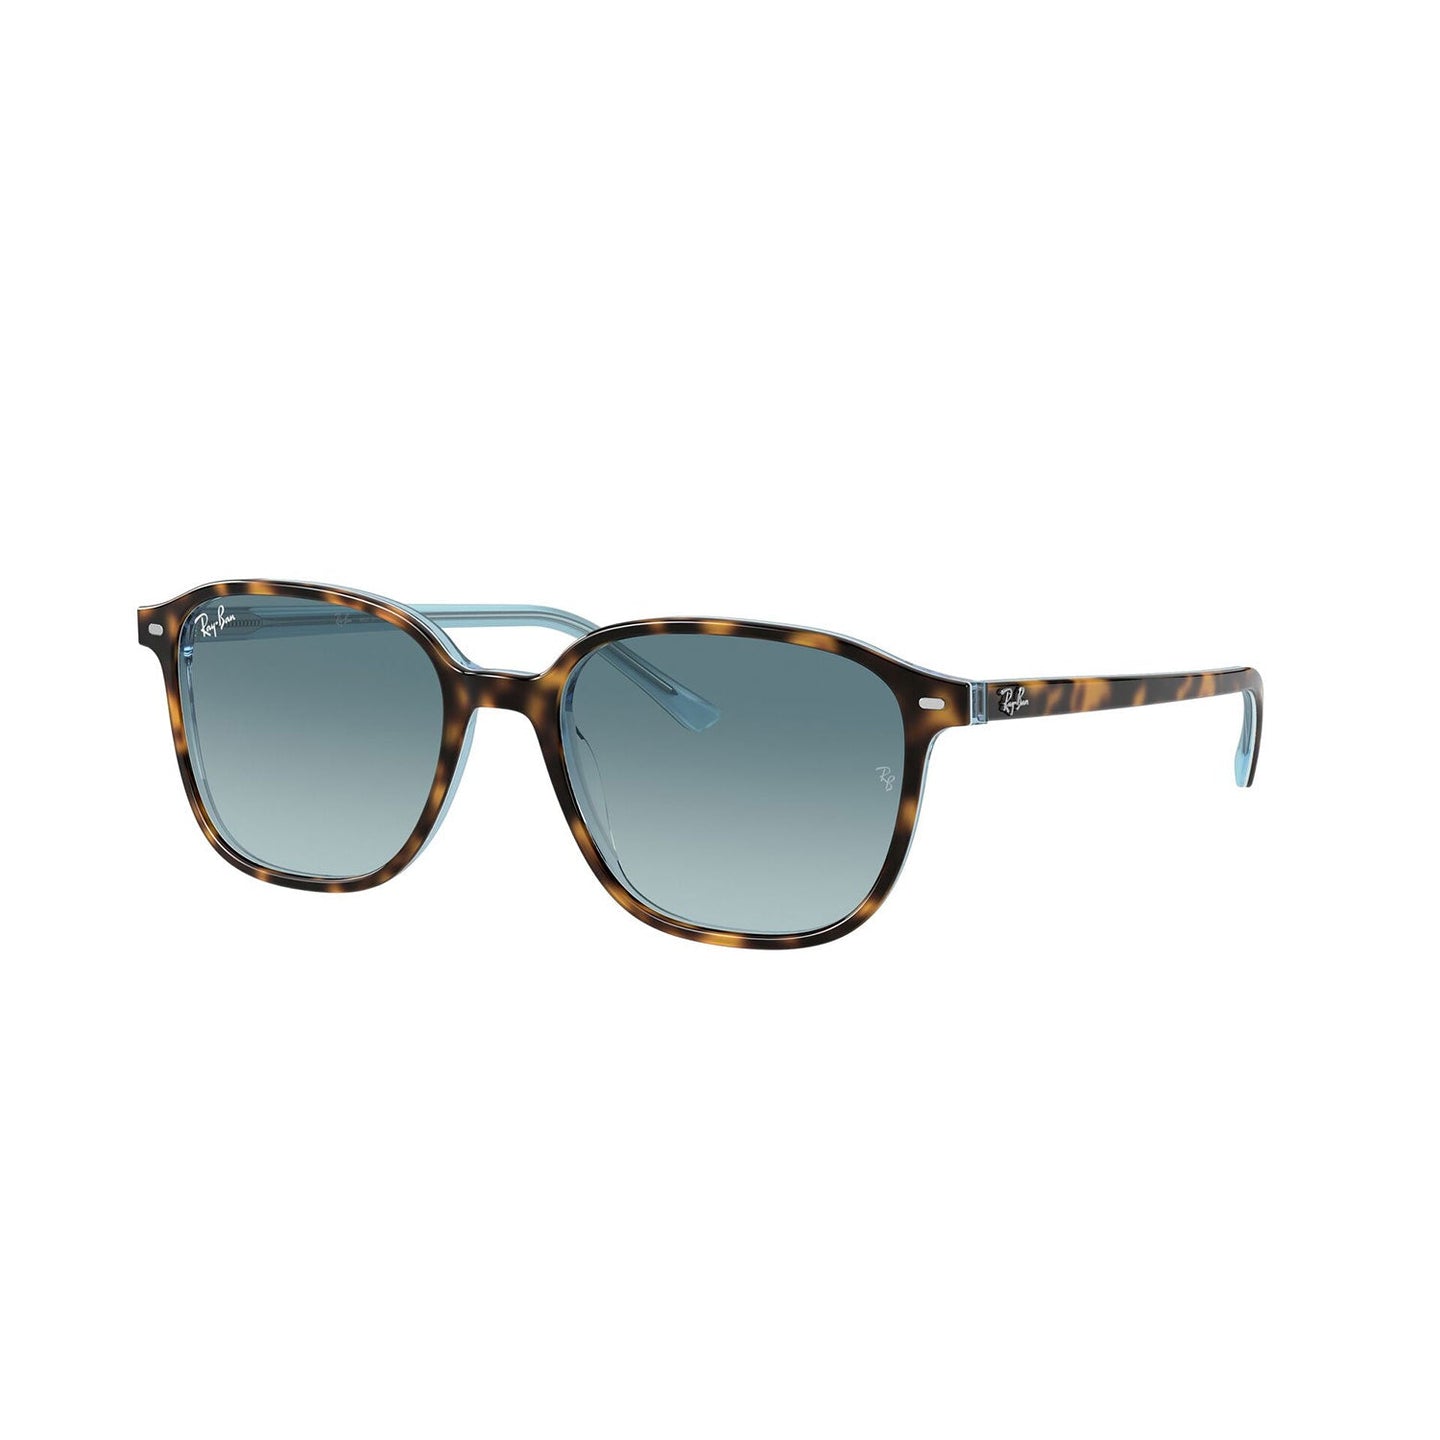 sunglasses ray ban model rb 2193 leonard color 13163m HAVANA ON LIGHT BLUE